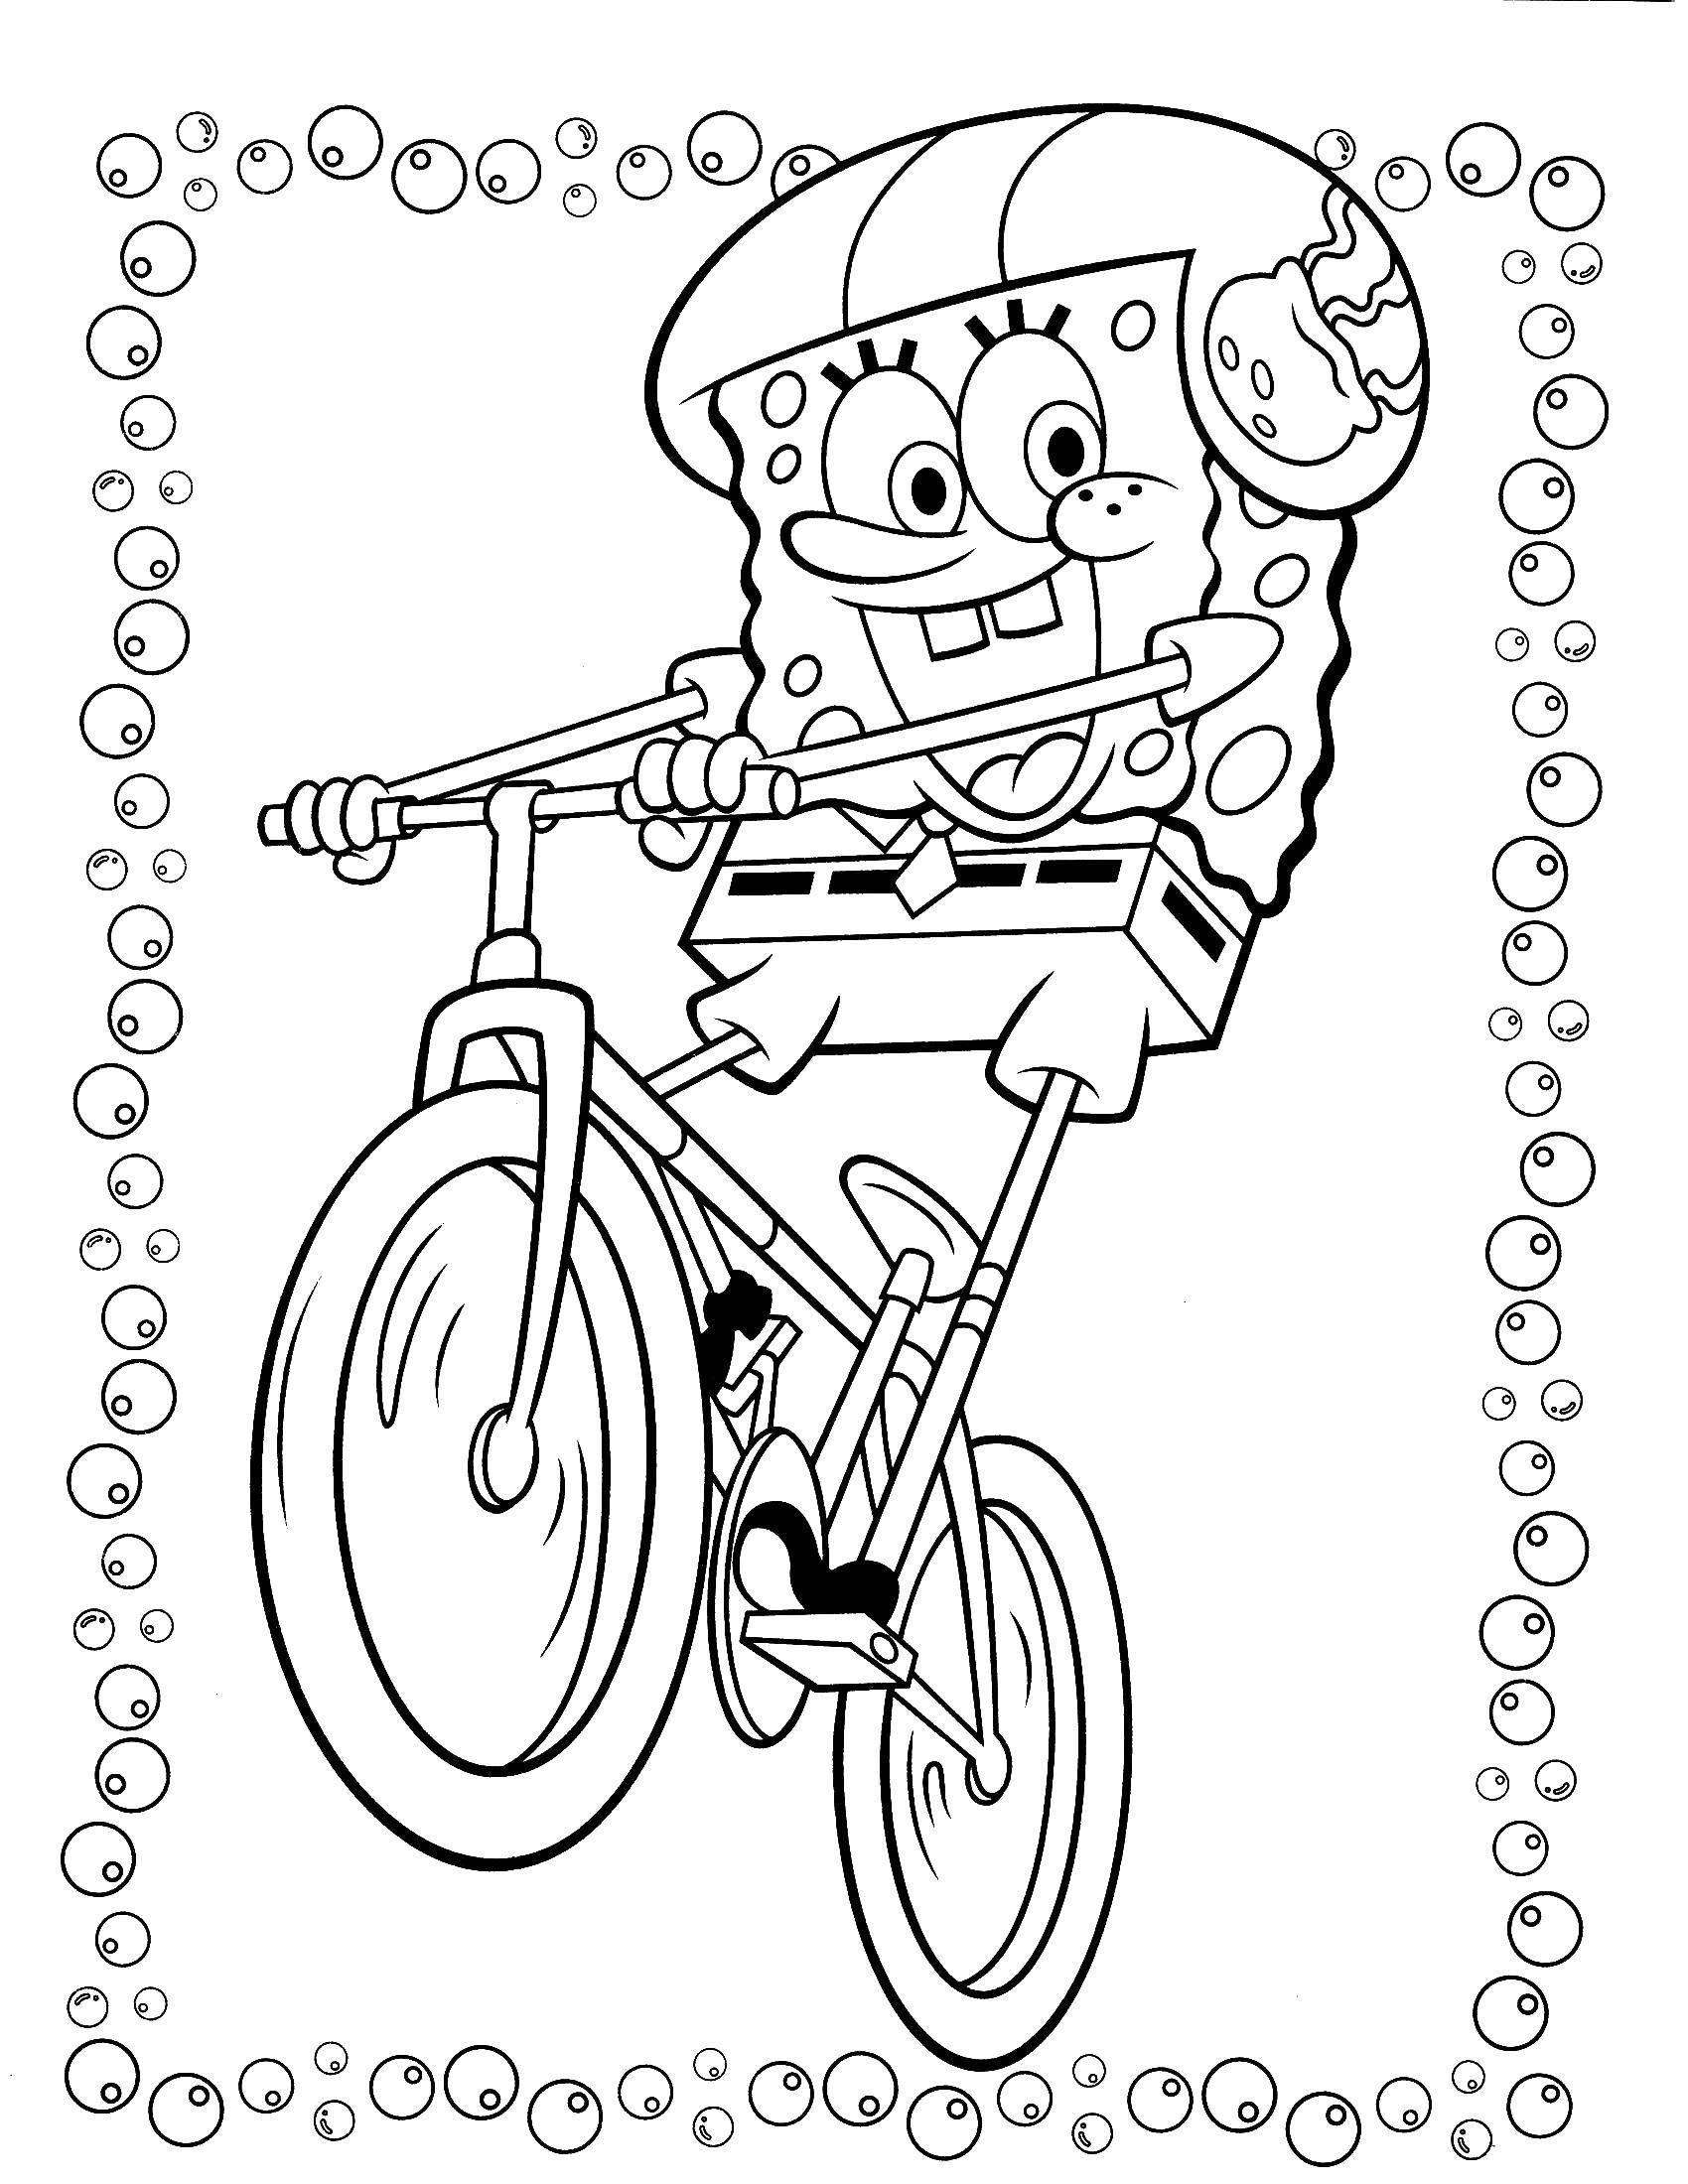 Coloring Spongebob rides his bike. Category Spongebob. Tags:  spongebob, Patrick.